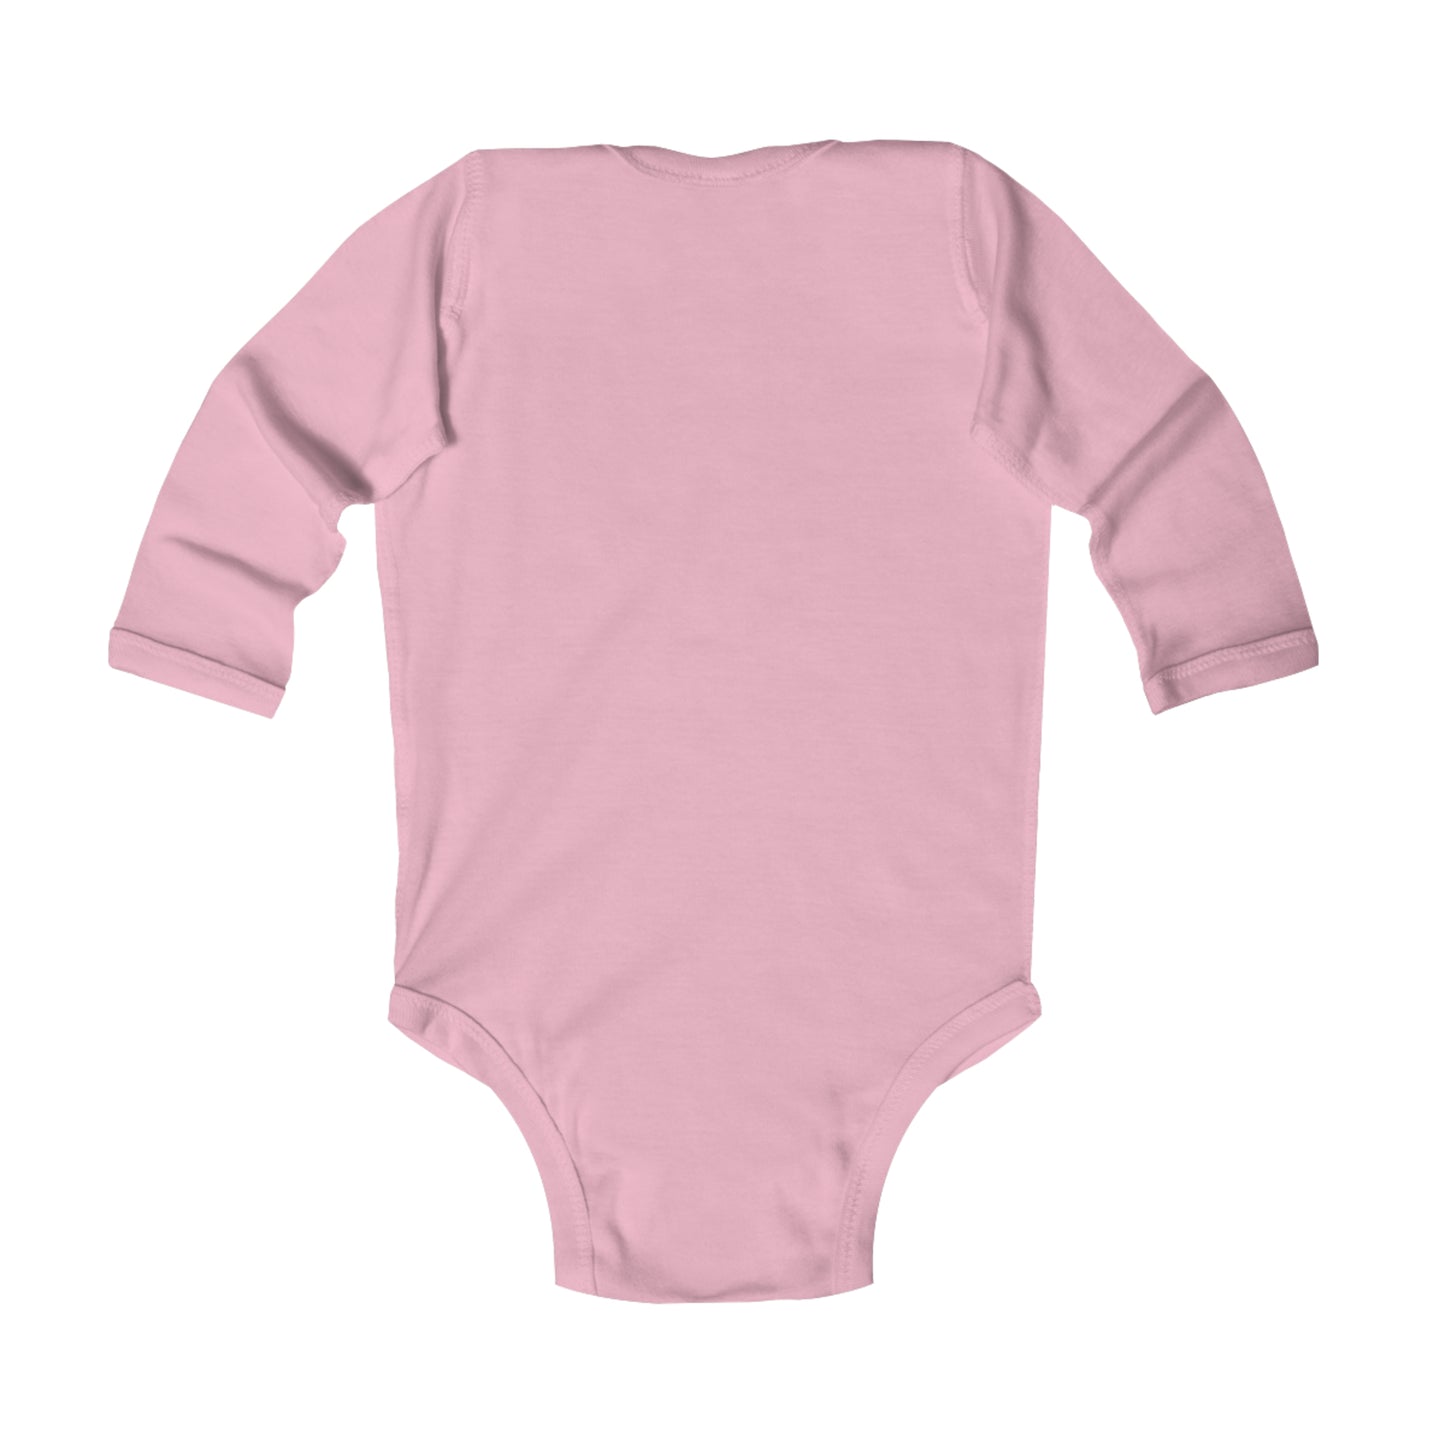 Infant Long Sleeve Bodysuit - Dream, Explore, and Achieve